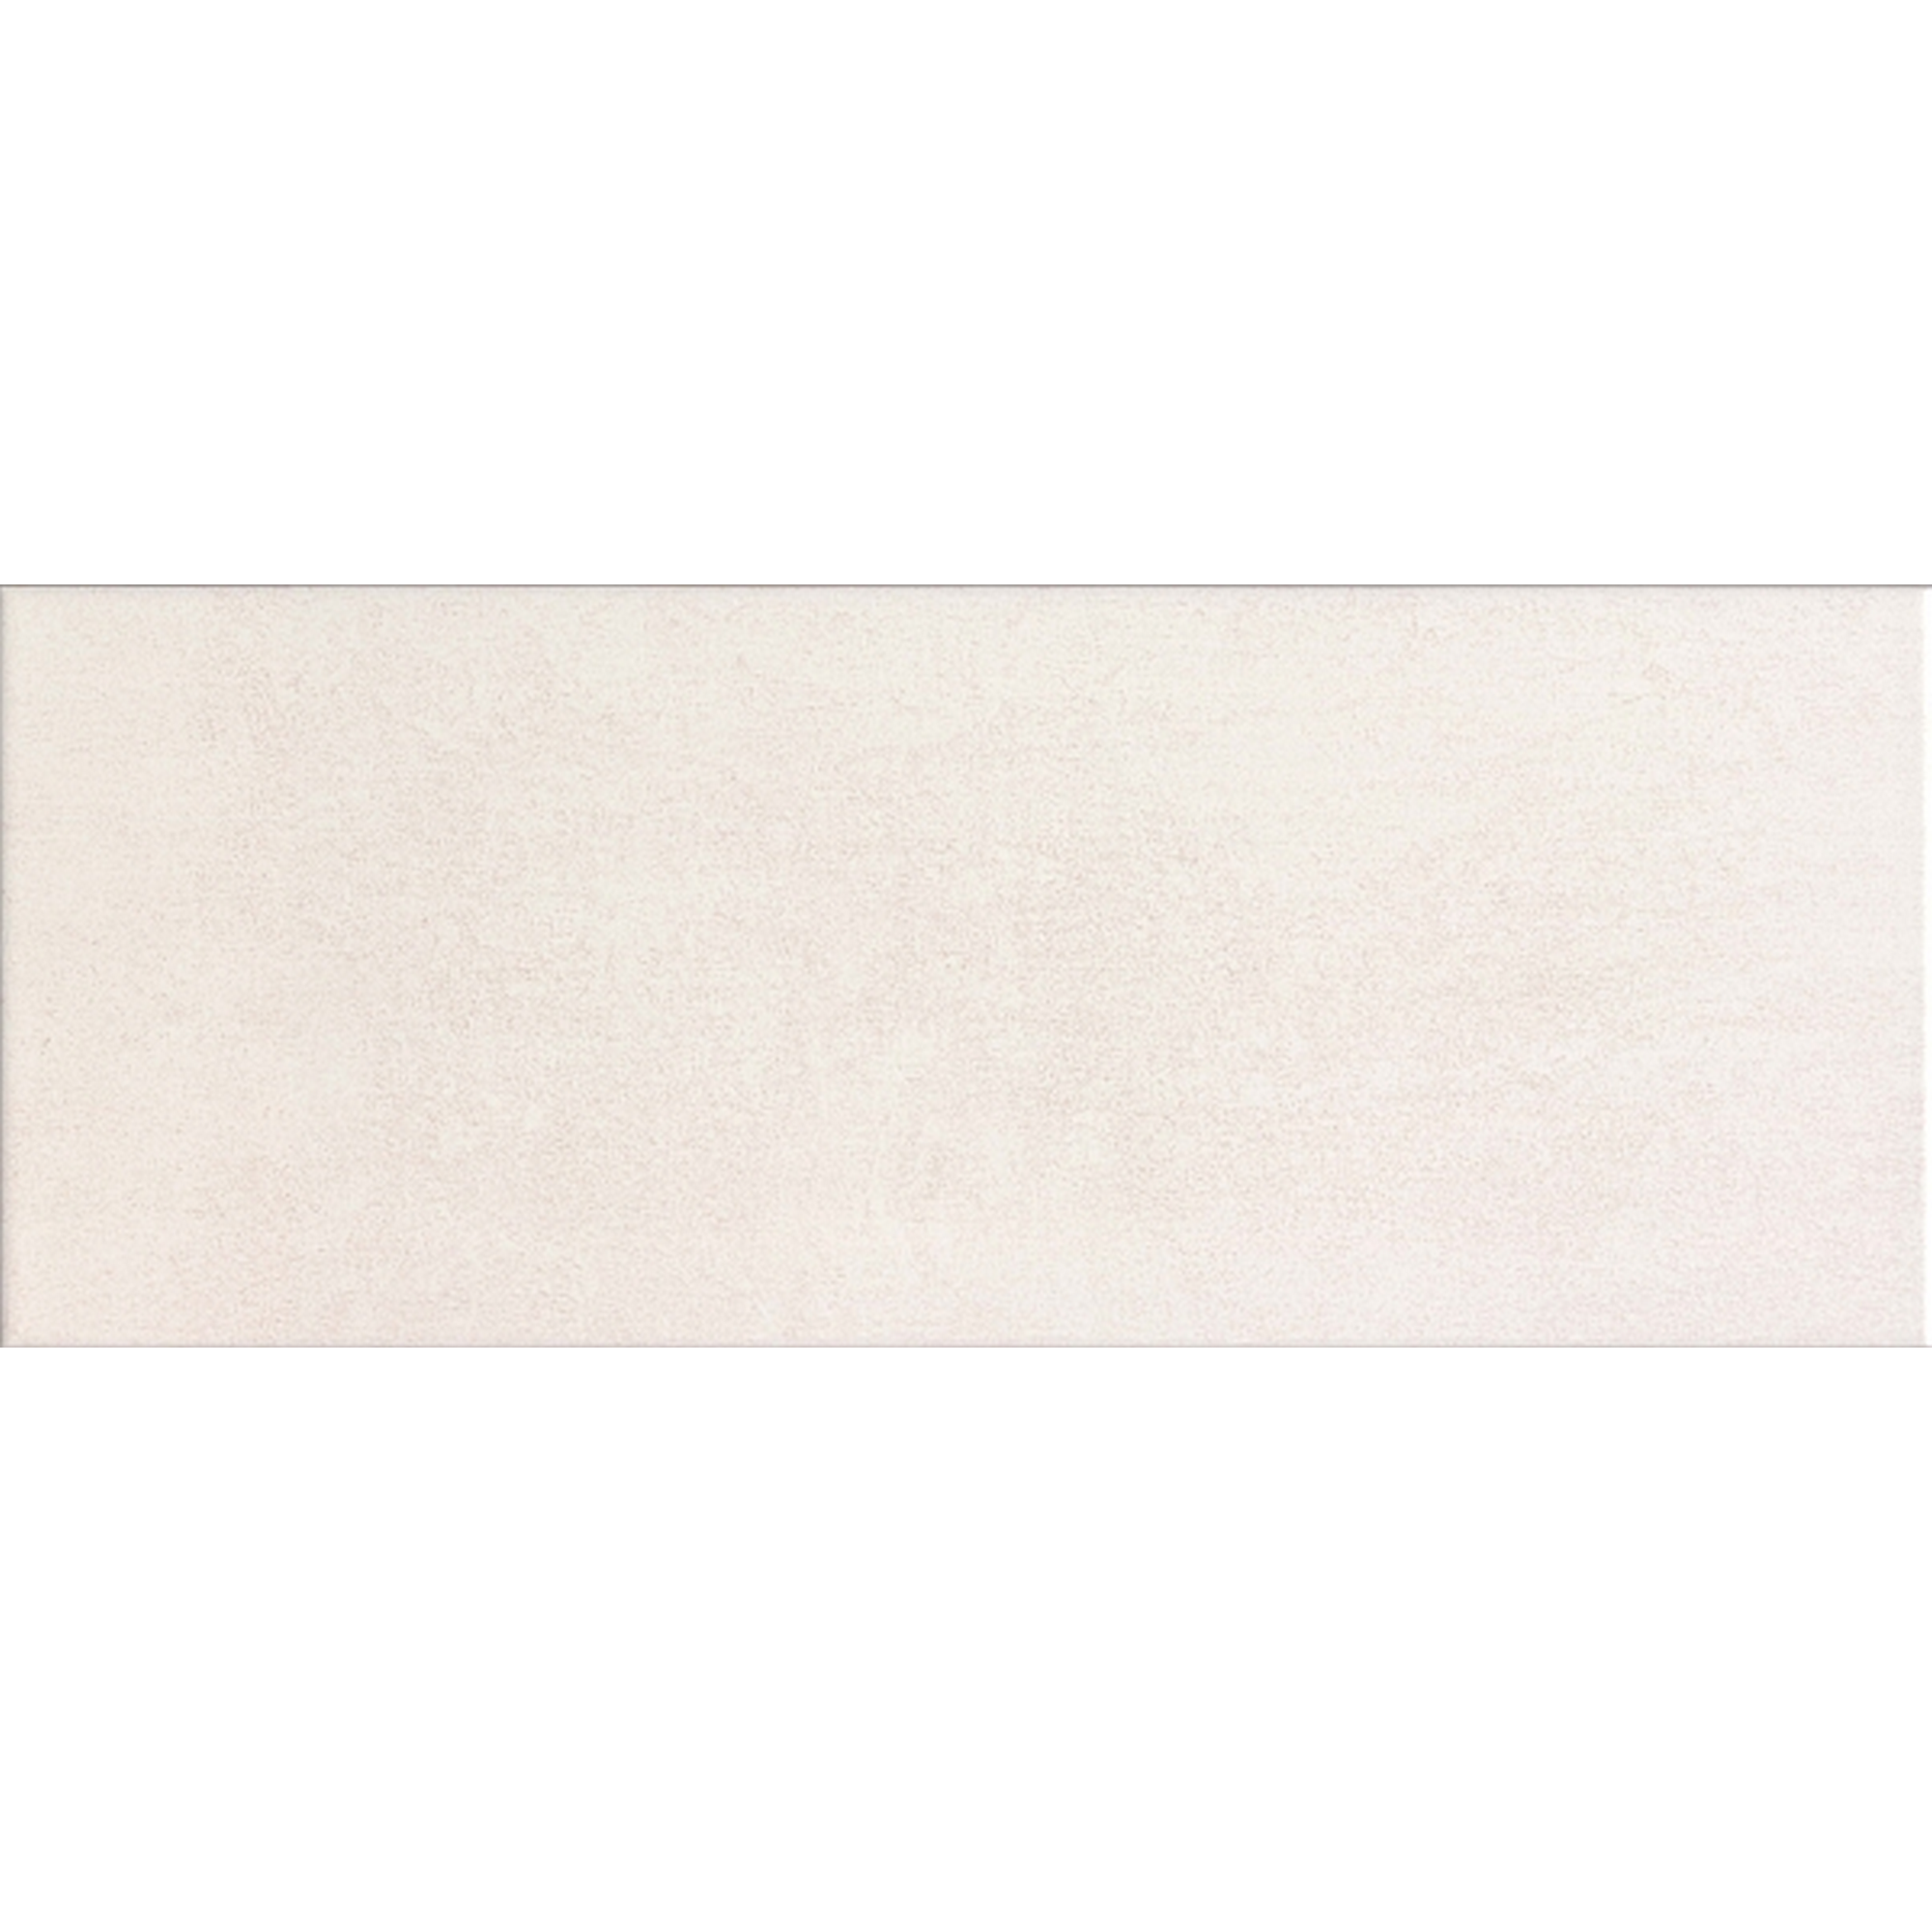 Wandfliese 'Country' beige matt 20 x 50 cm + product picture